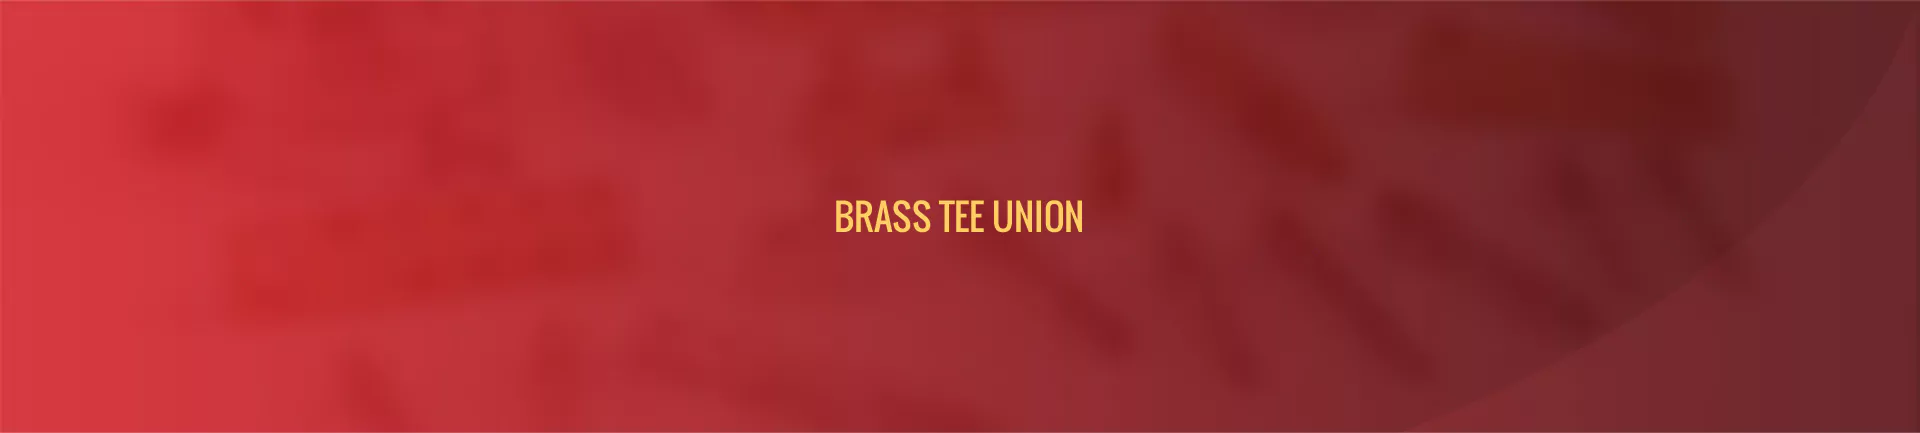 brass_tee_union-banner